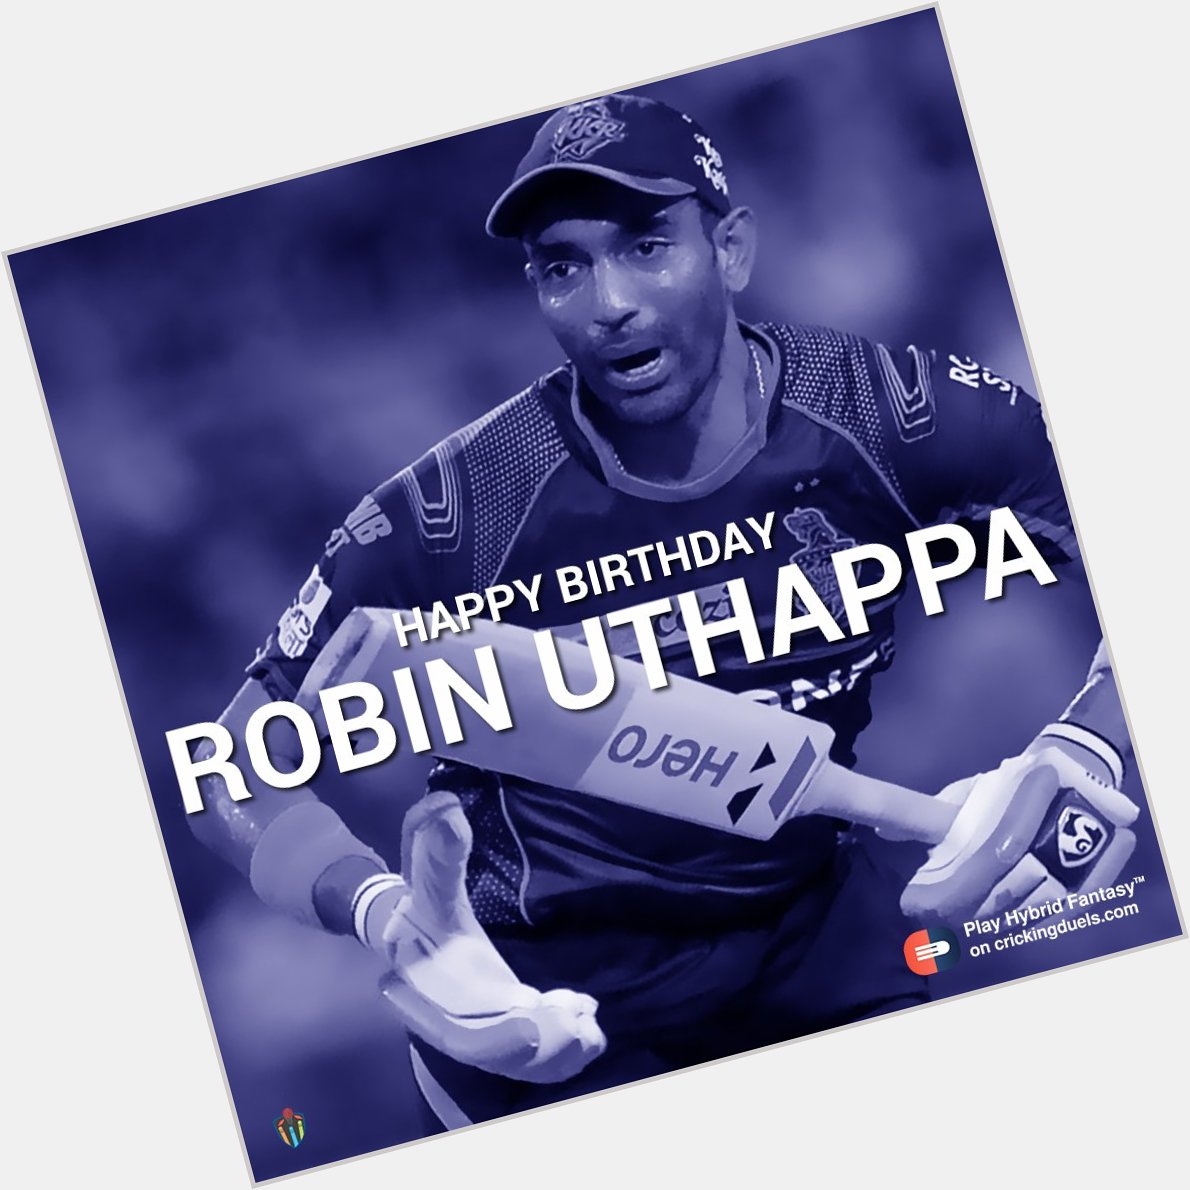 Happy birthday, Robin
Uthappa. 